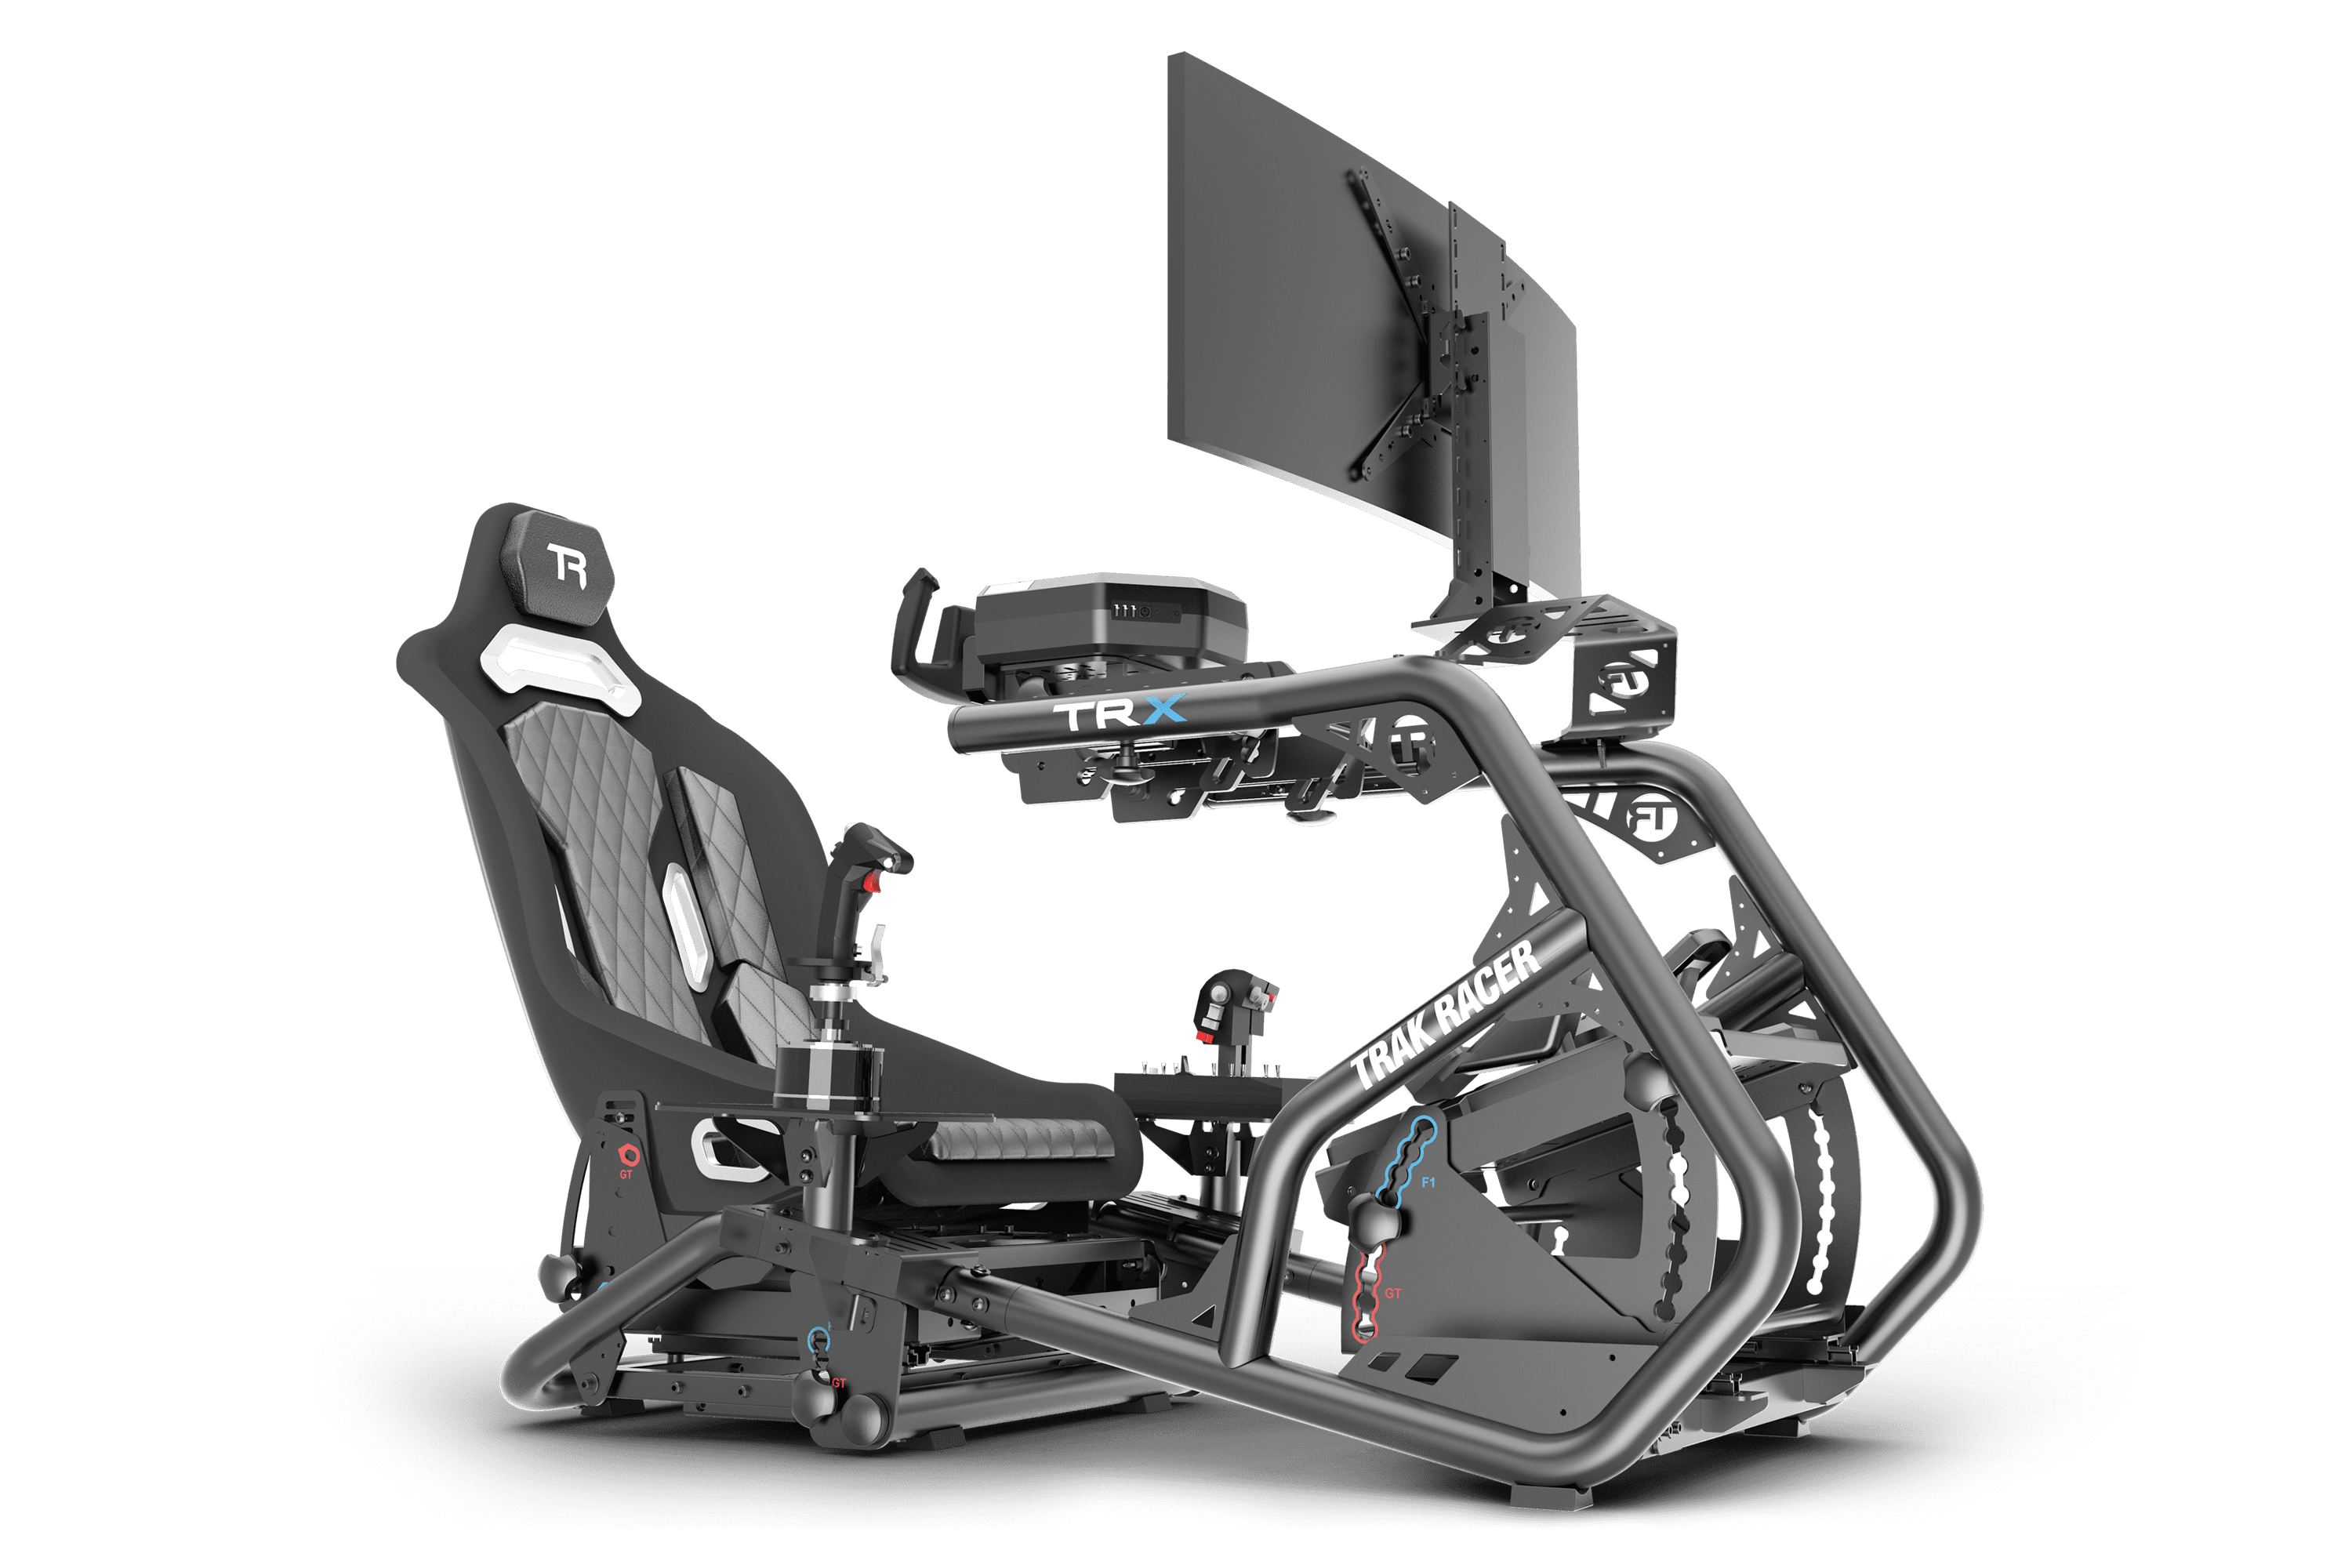 Flight Simulator Mounts - Left and Right Set for Alpine Racing TRX